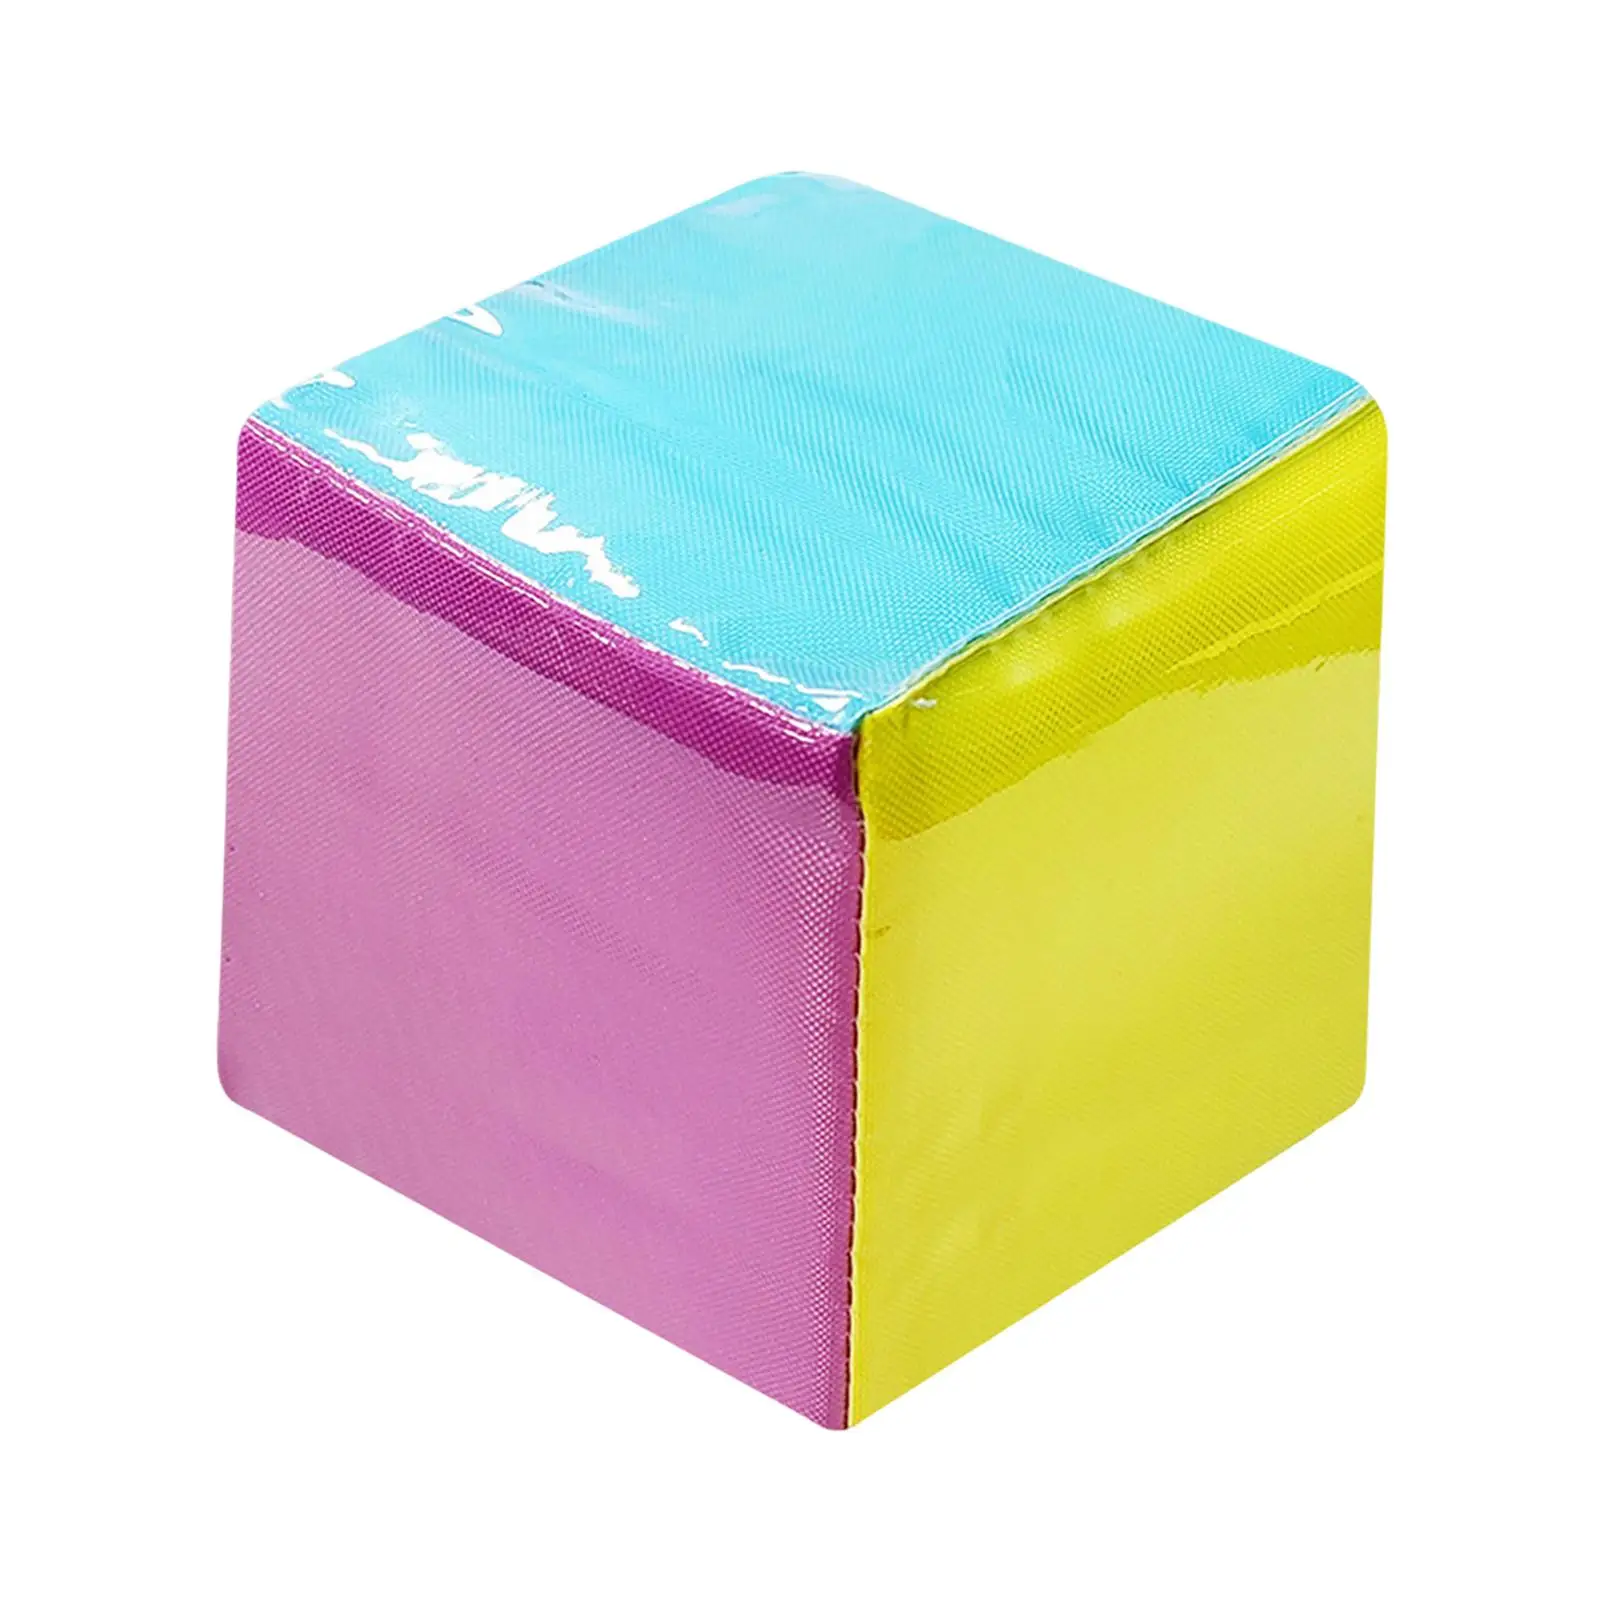 Large Dice Plush Cube Props 10cm Soft Pocket Dice for Blocks Toys Classroom